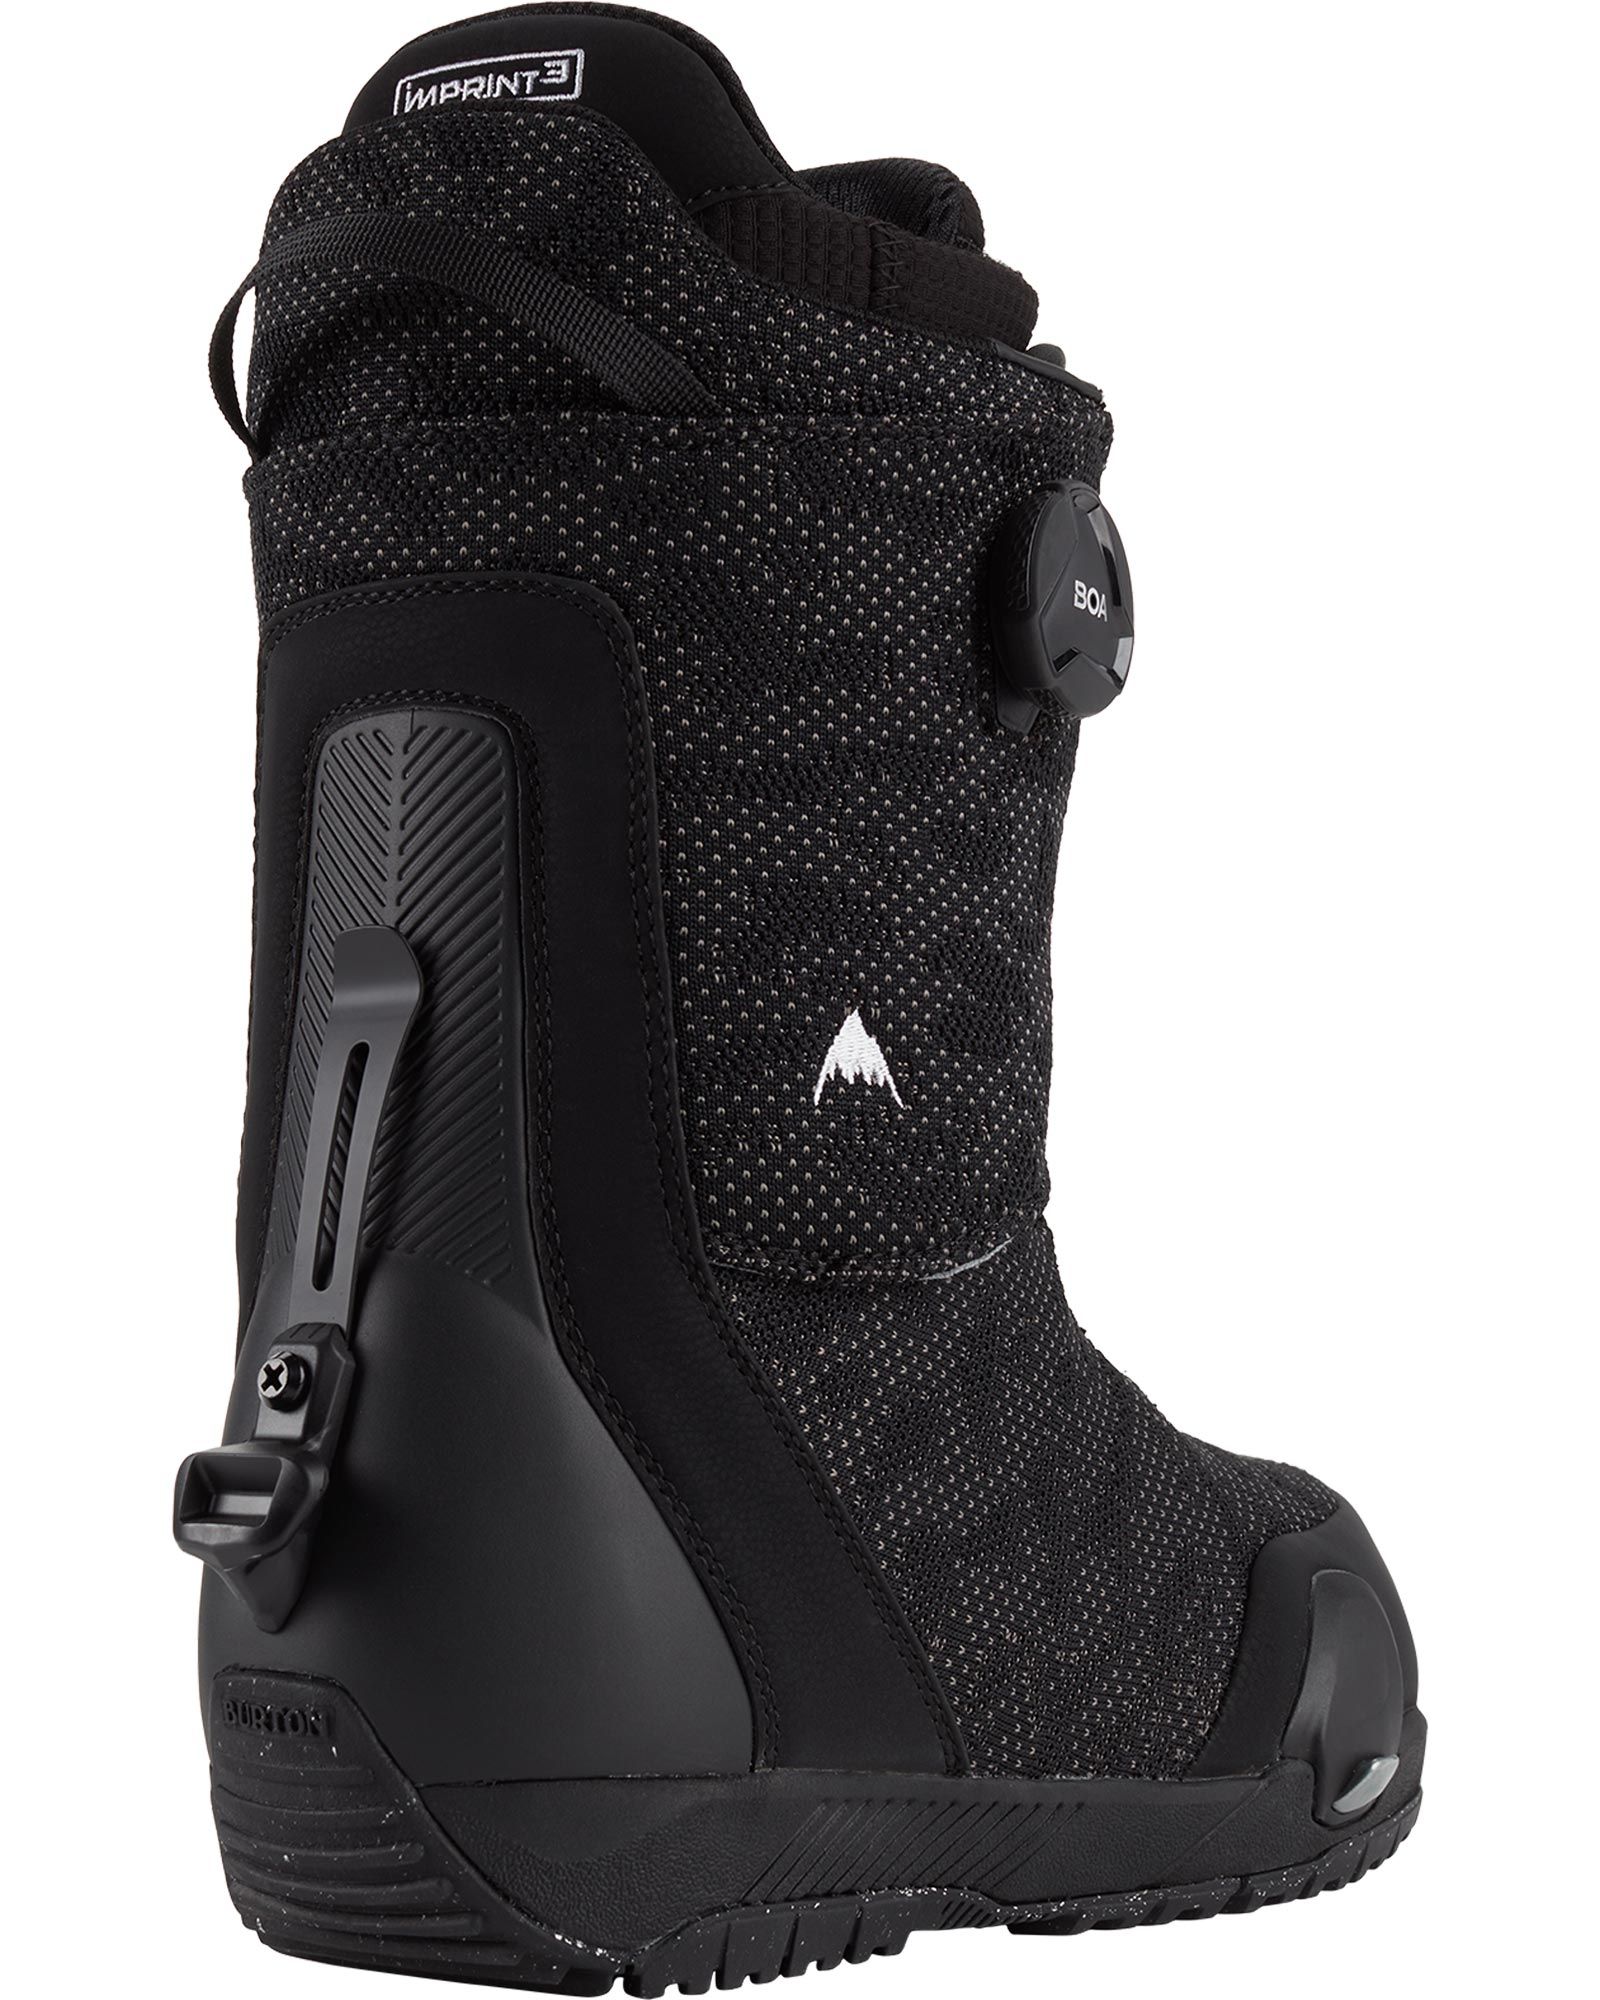 Boots de snowboard Swath Black Step On